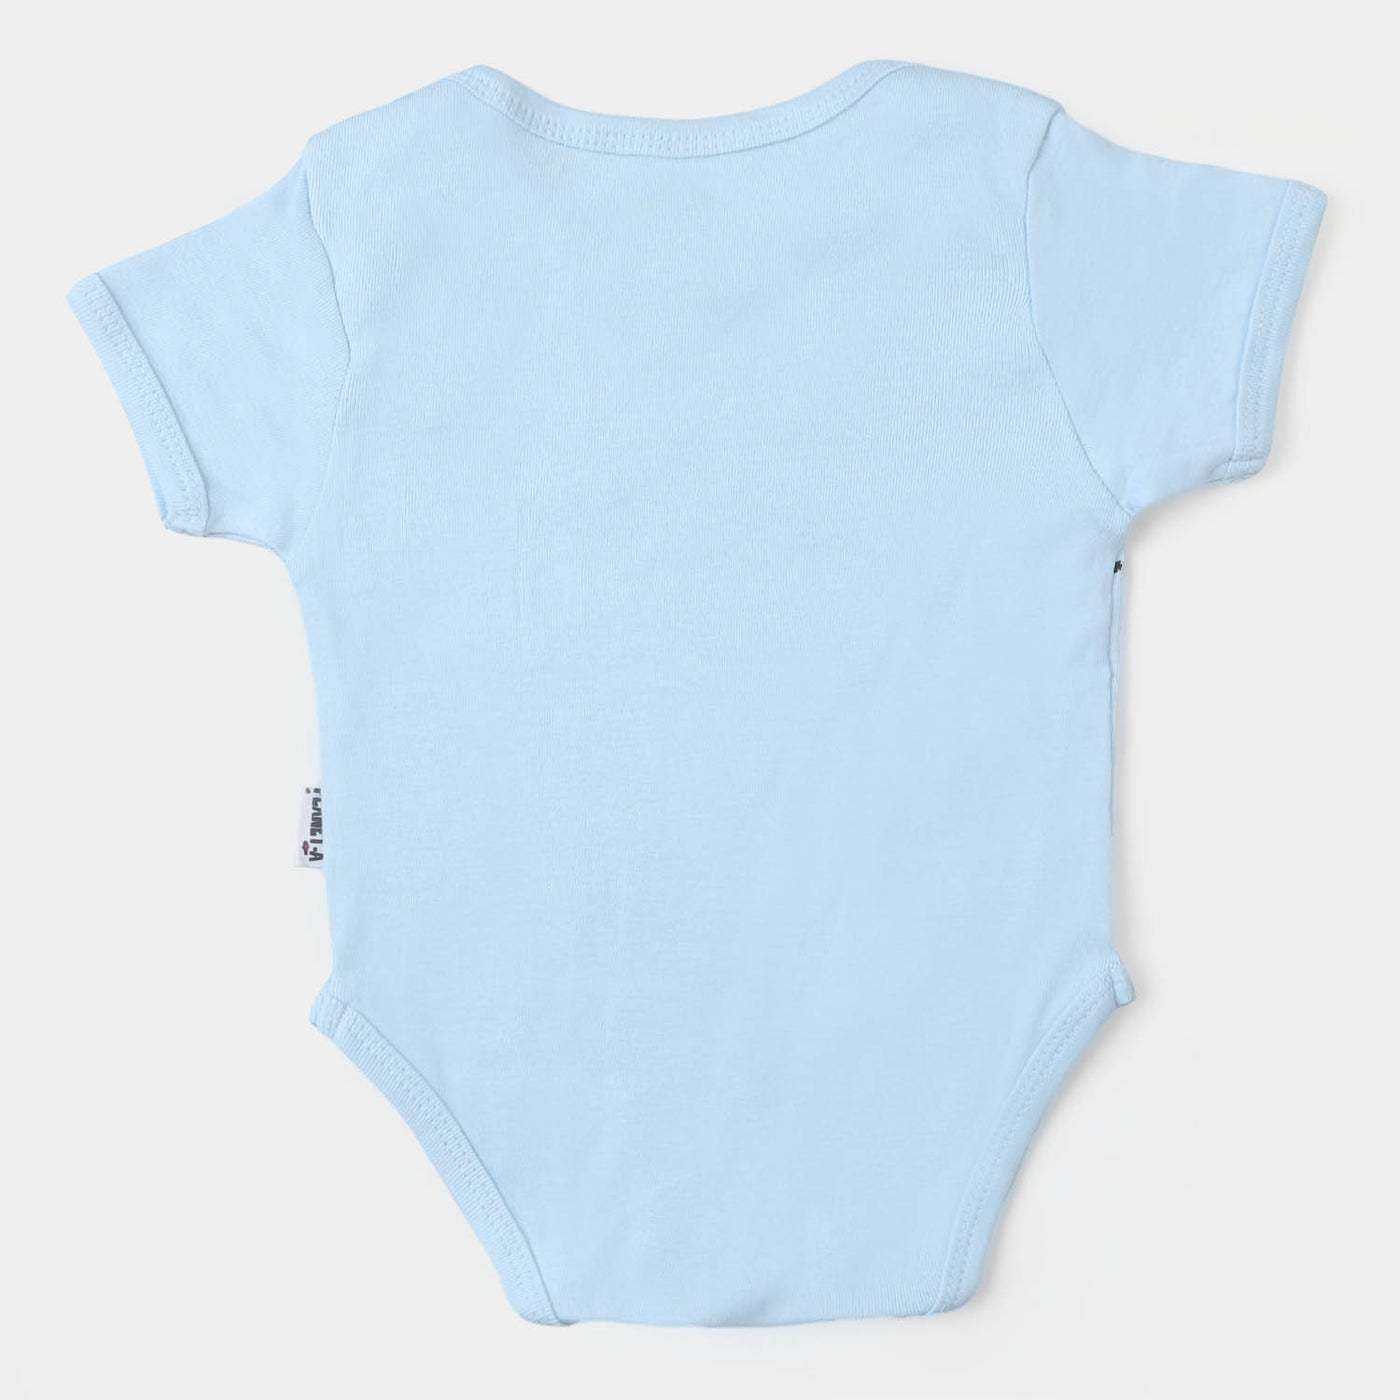 Infant Basic Cotton Romper Unisex Awesome - Sky Blue